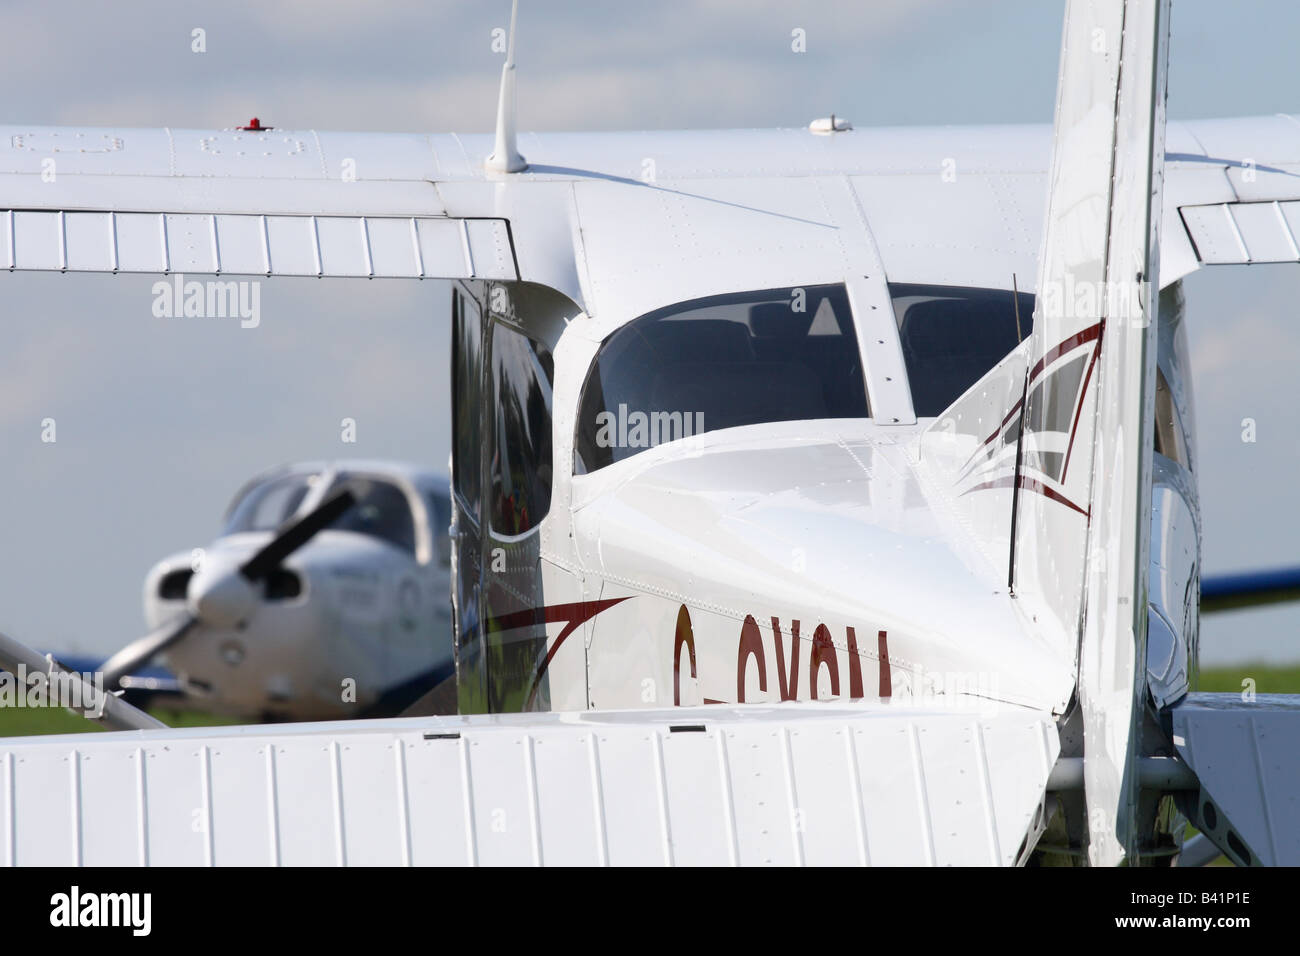 General Aviation flight training school aircraft Cessna 172 and Piper Pa-28 Cherokee share parking apron ramp Stock Photo